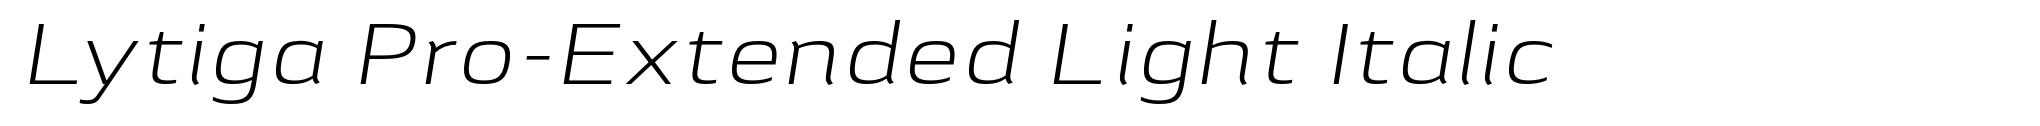 Lytiga Pro-Extended Light Italic image